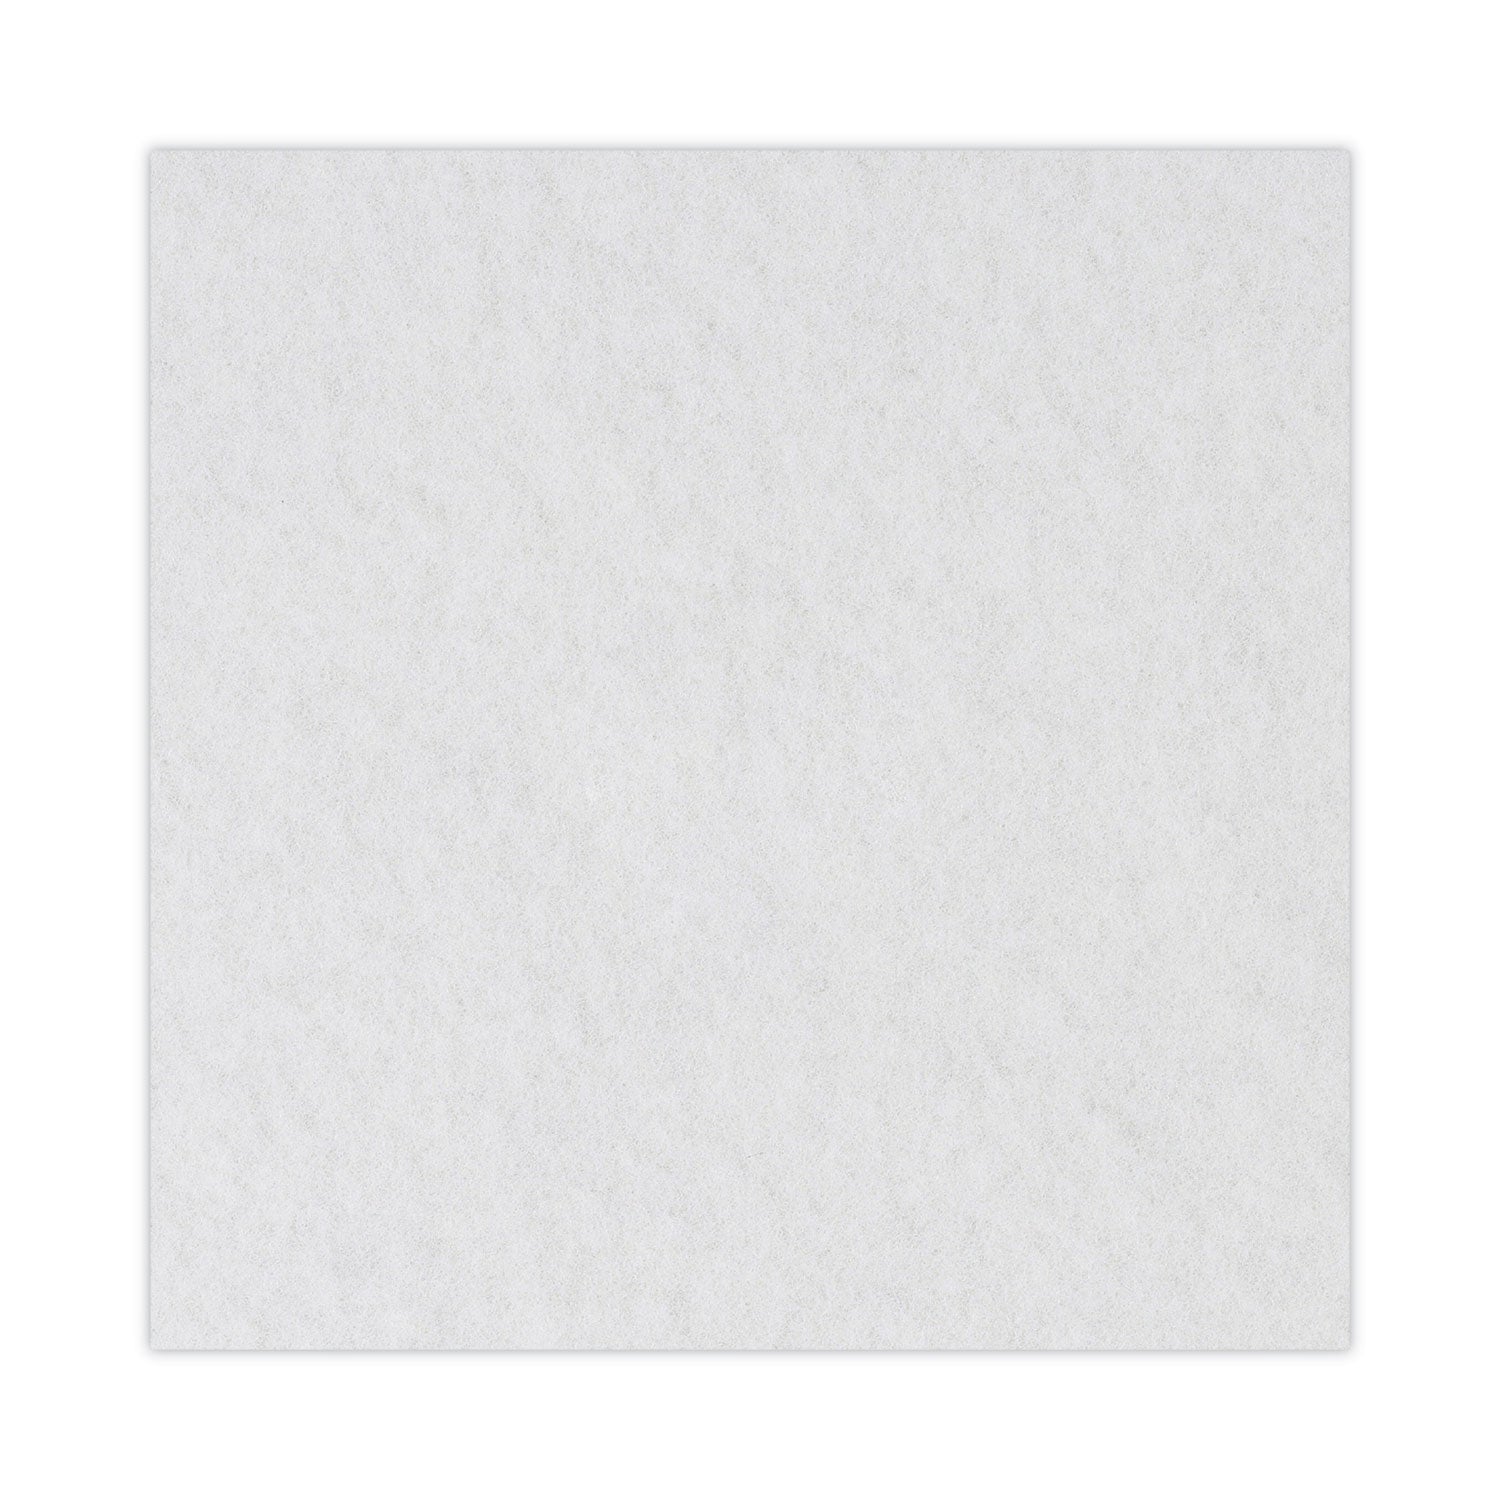 Polishing Floor Pads, 12" Diameter, White, 5/Carton - 